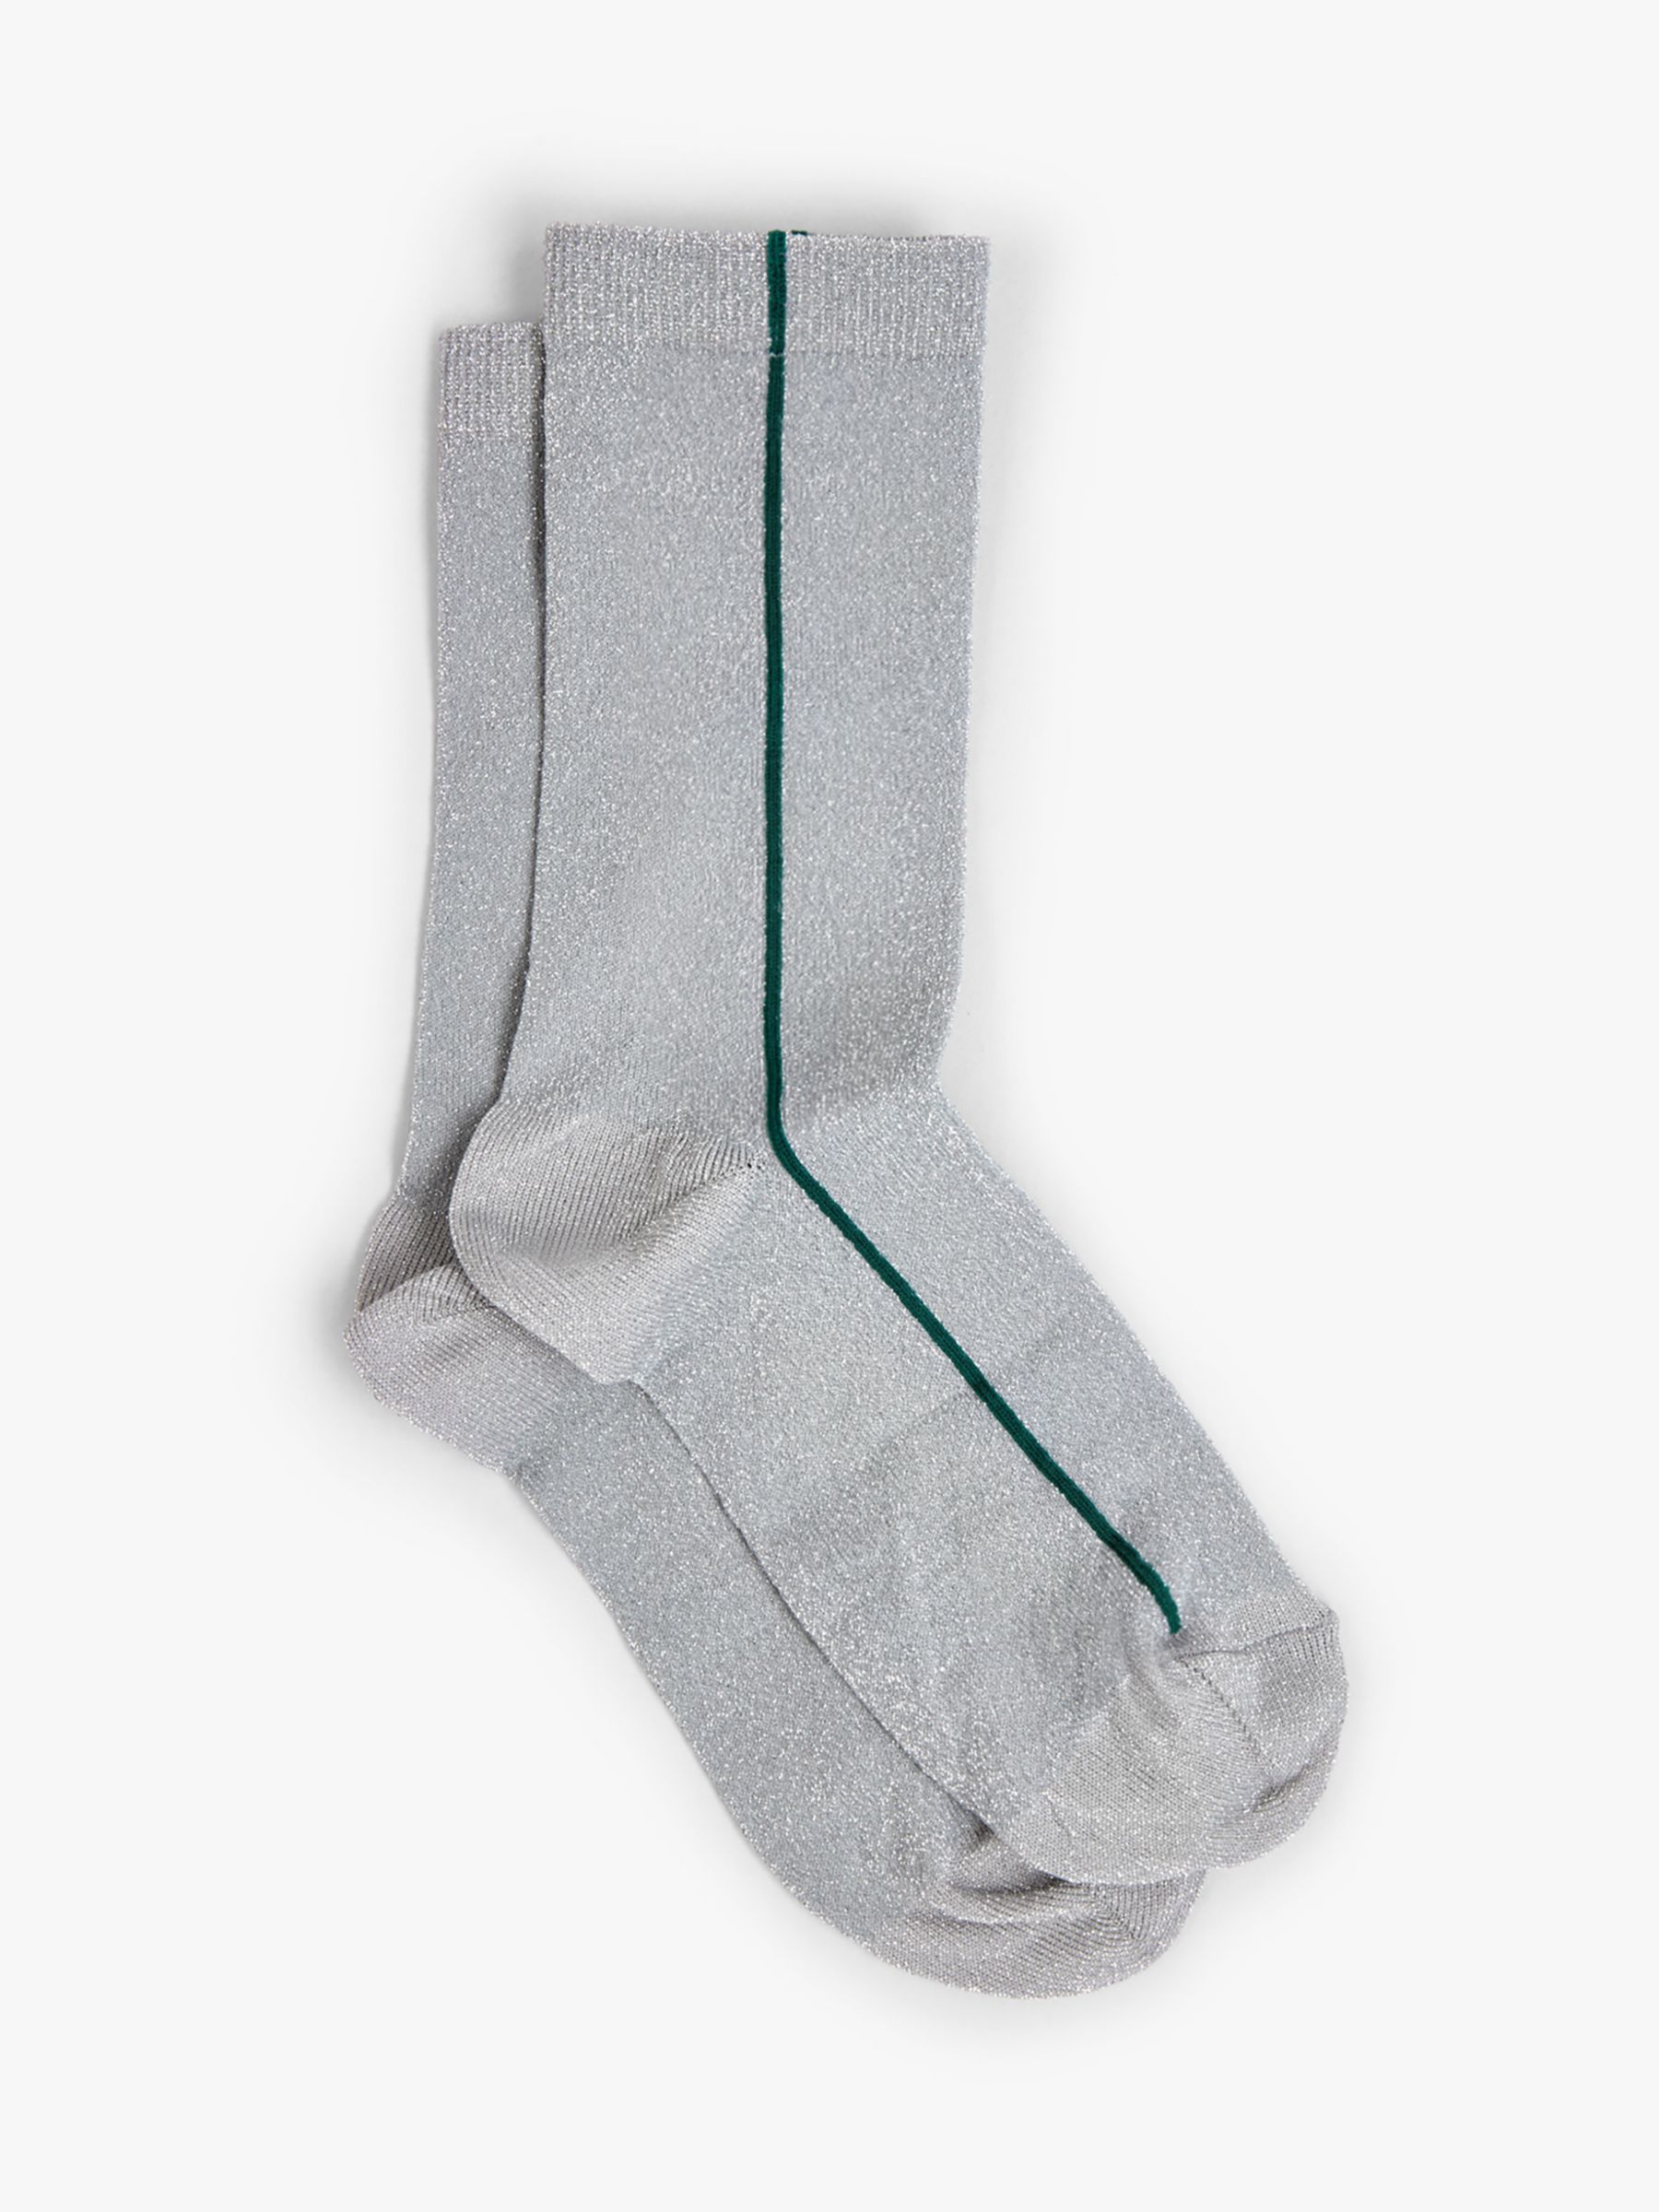 Mango Metallc Ankle Socks, Silver, One Size at John Lewis & Partners